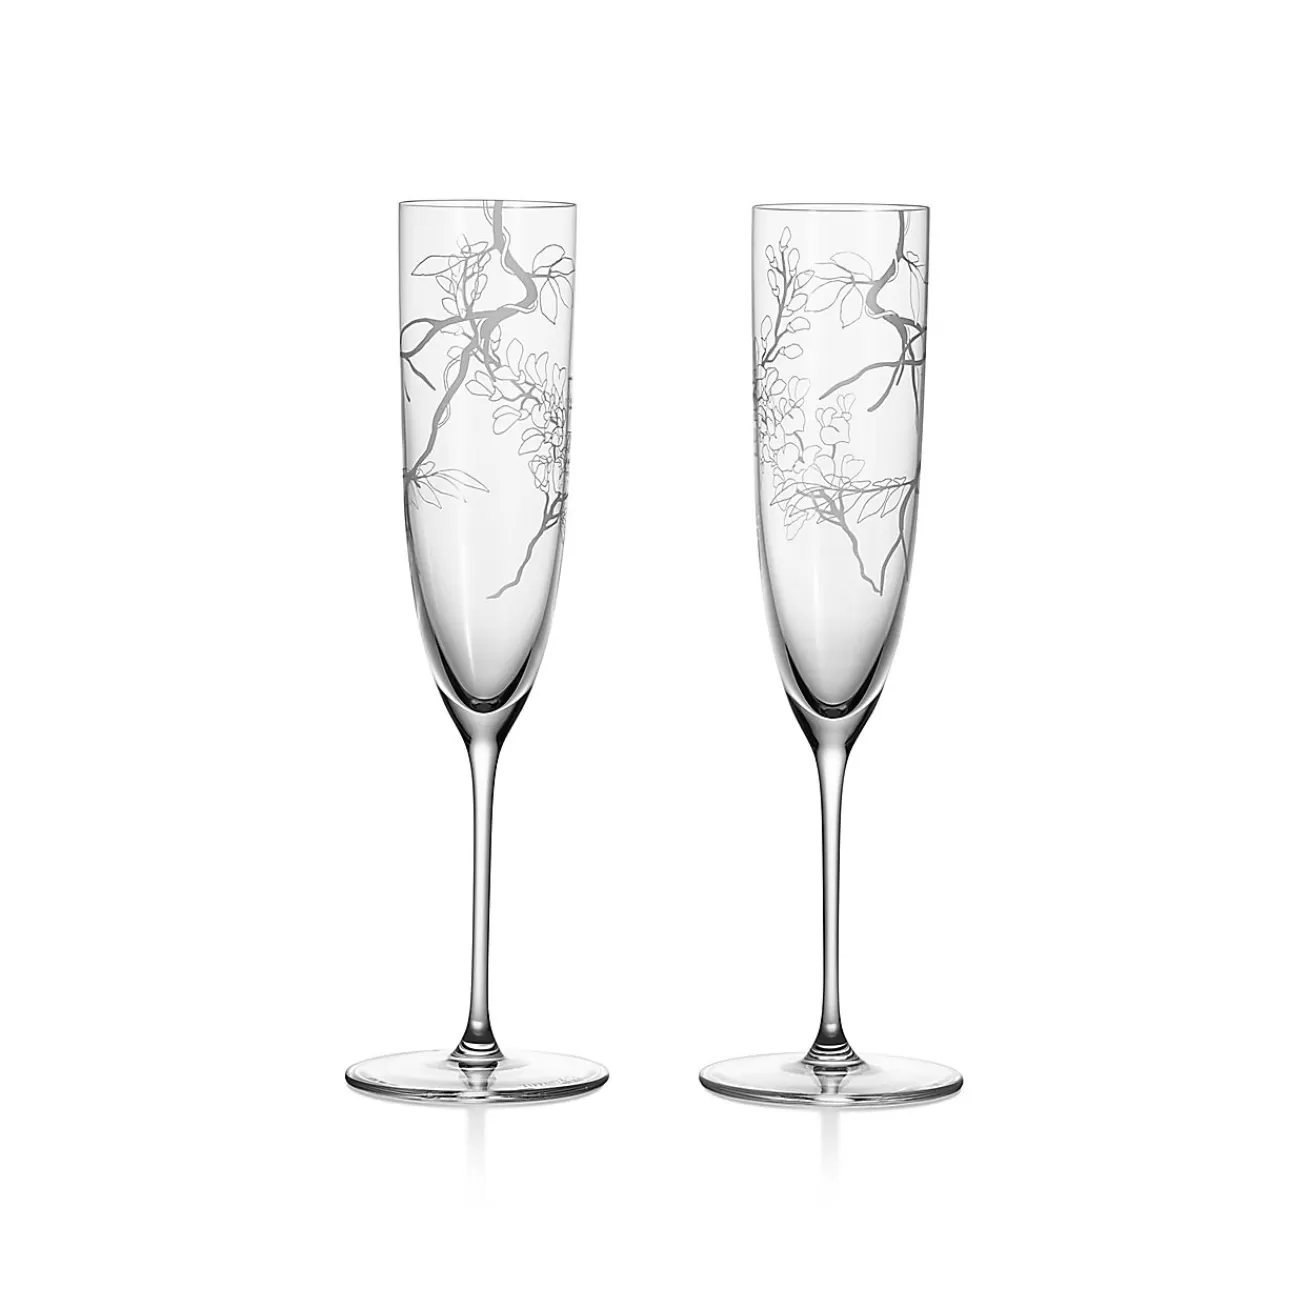 Tiffany & Co. Tiffany Wisteria Champagne Glasses in Etched Glass, Set of Two | ^ Tableware | Glassware & Barware